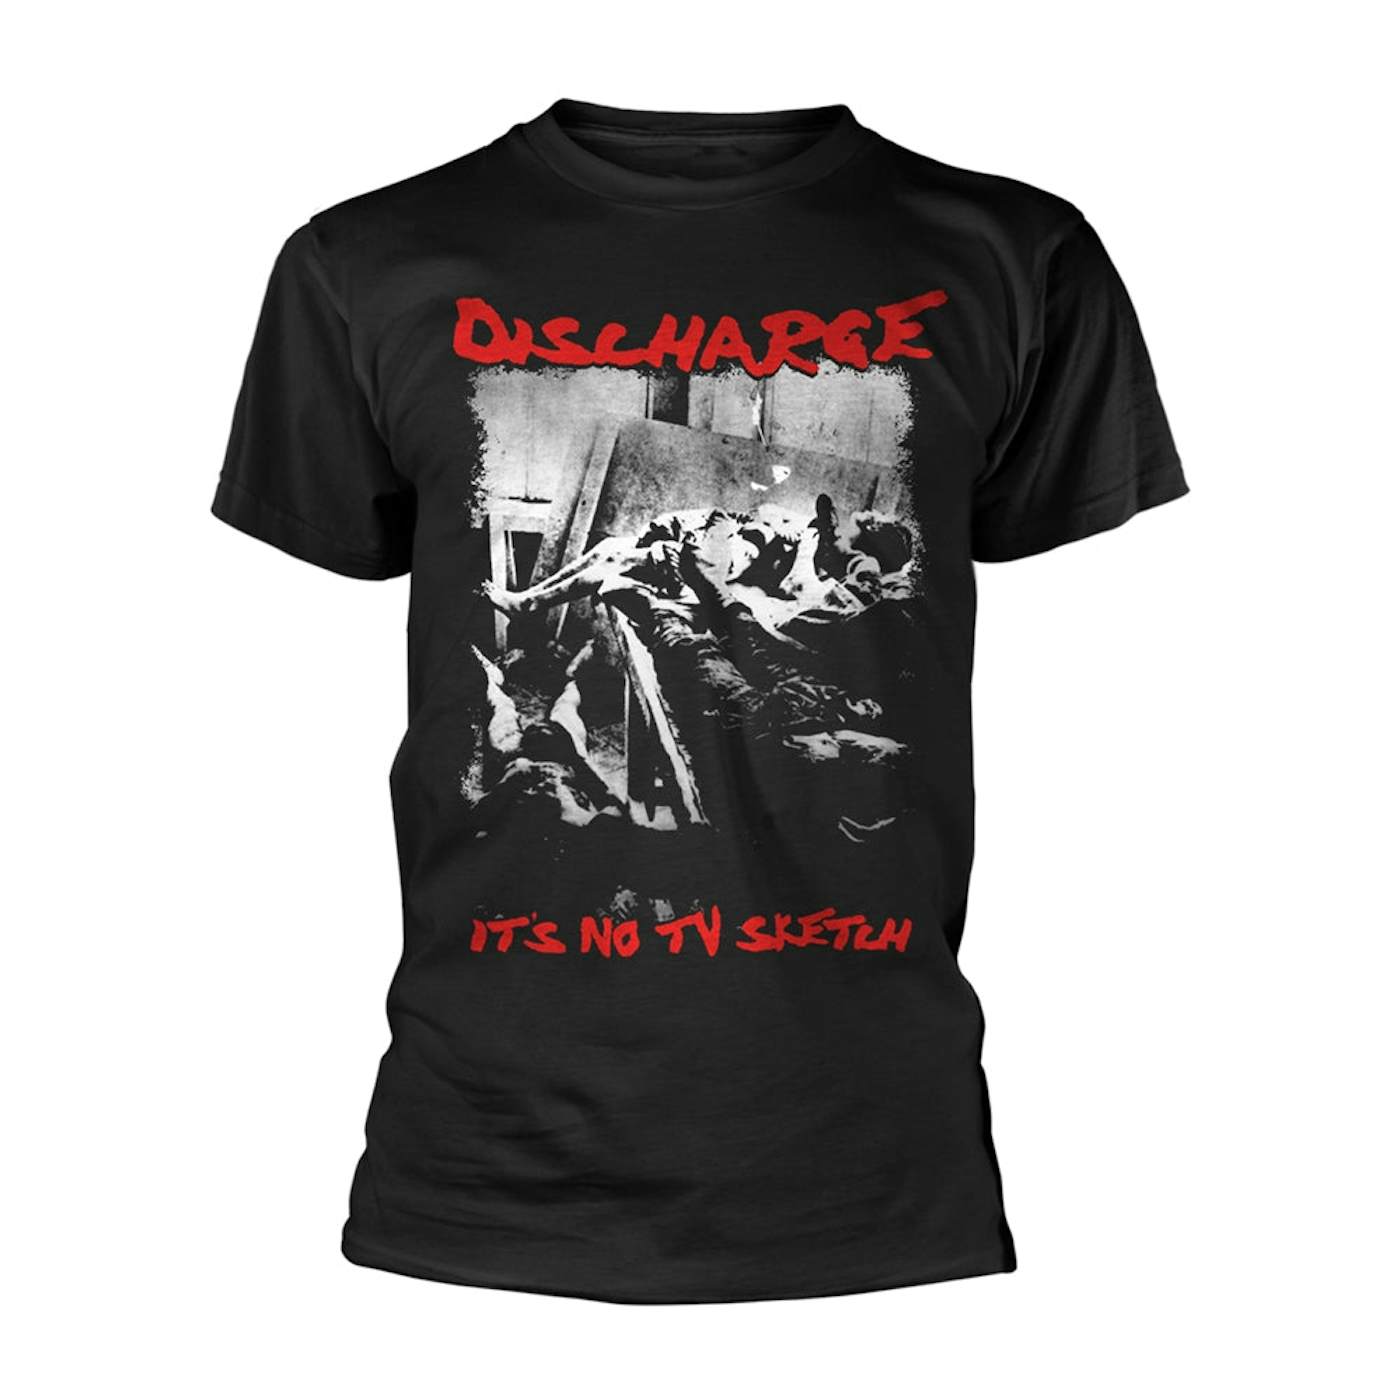 Discharge T Shirt - Its No Tv Sketch